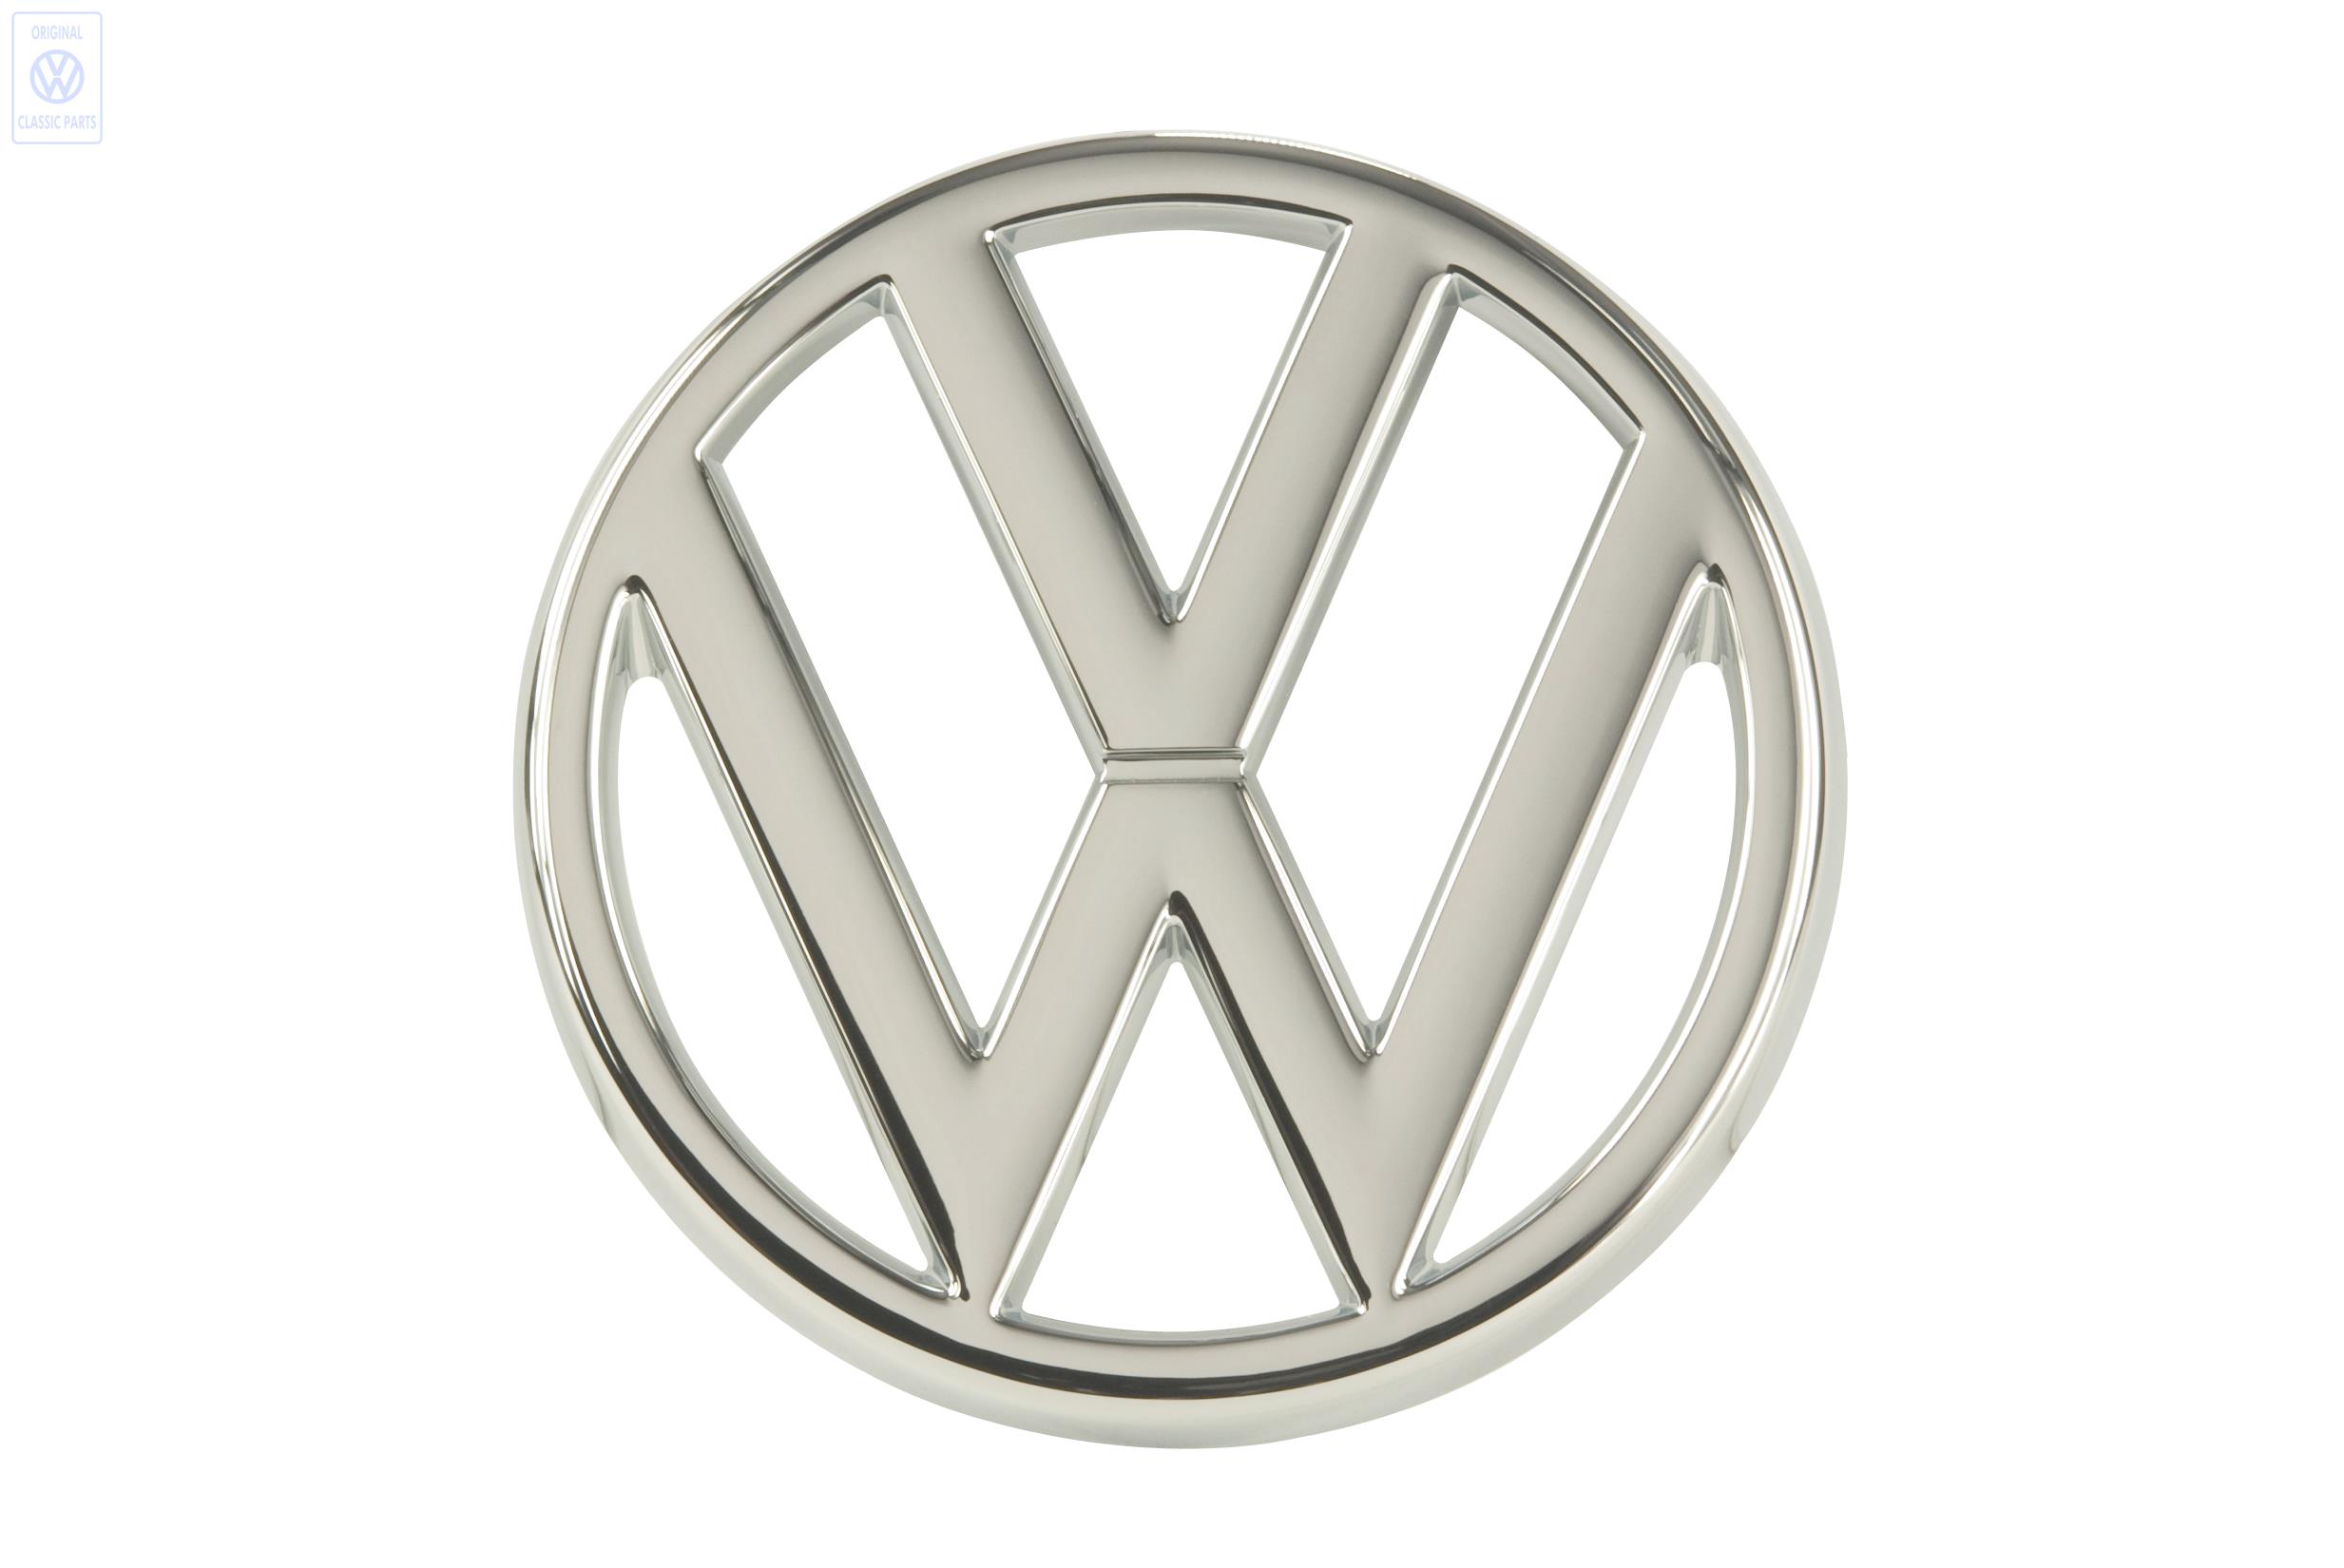 Front VW emblem